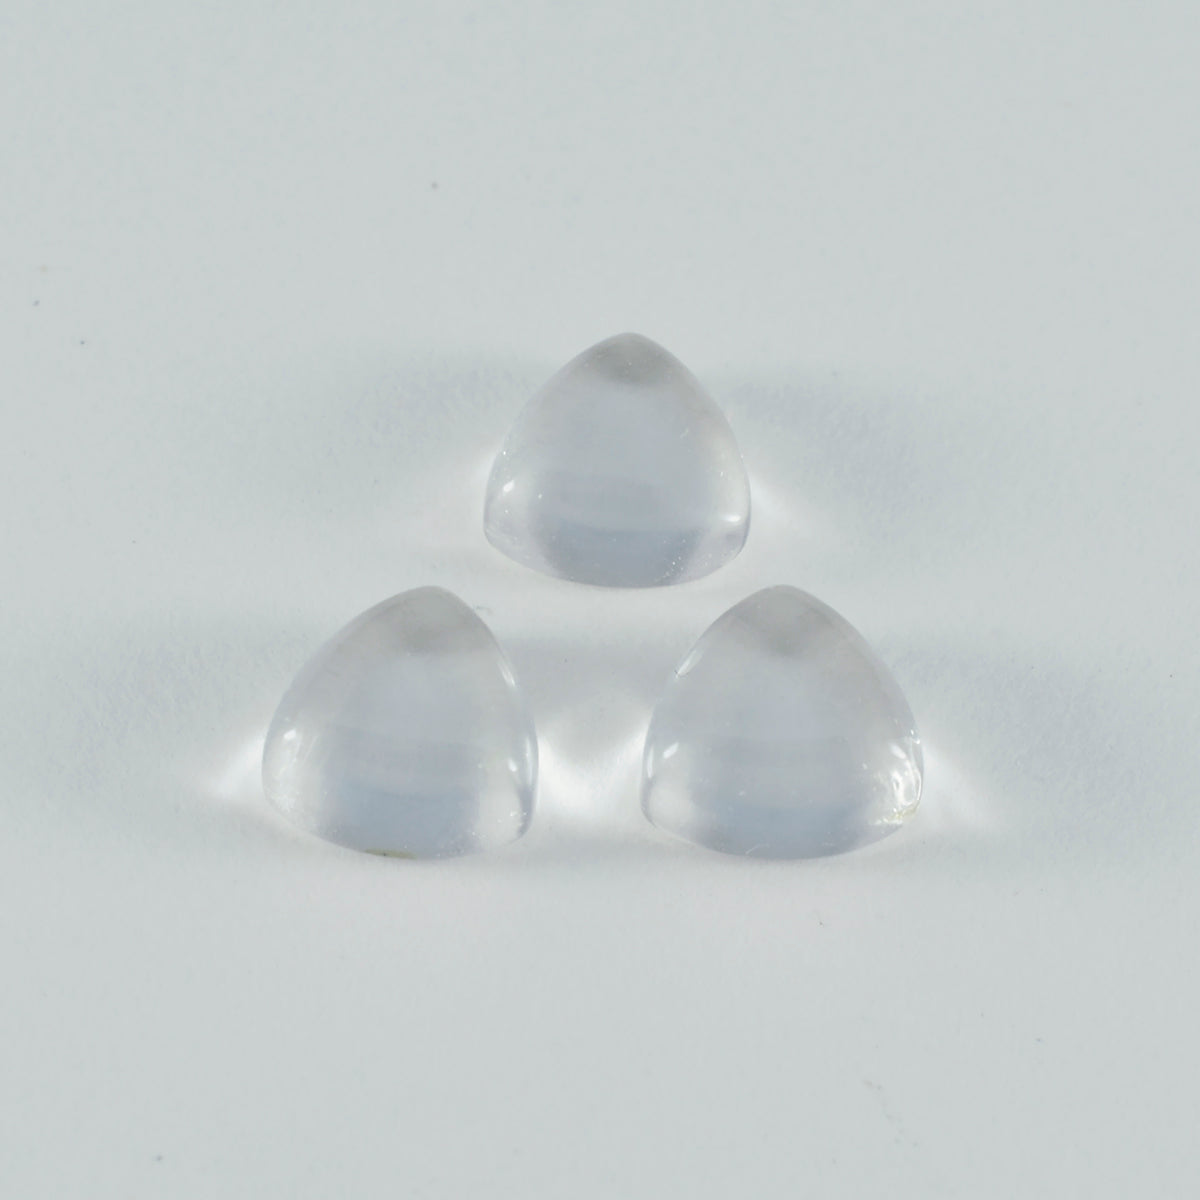 riyogems 1pc ホワイト クリスタル クォーツ カボション 13x13 mm 兆形状驚くべき品質のルース宝石